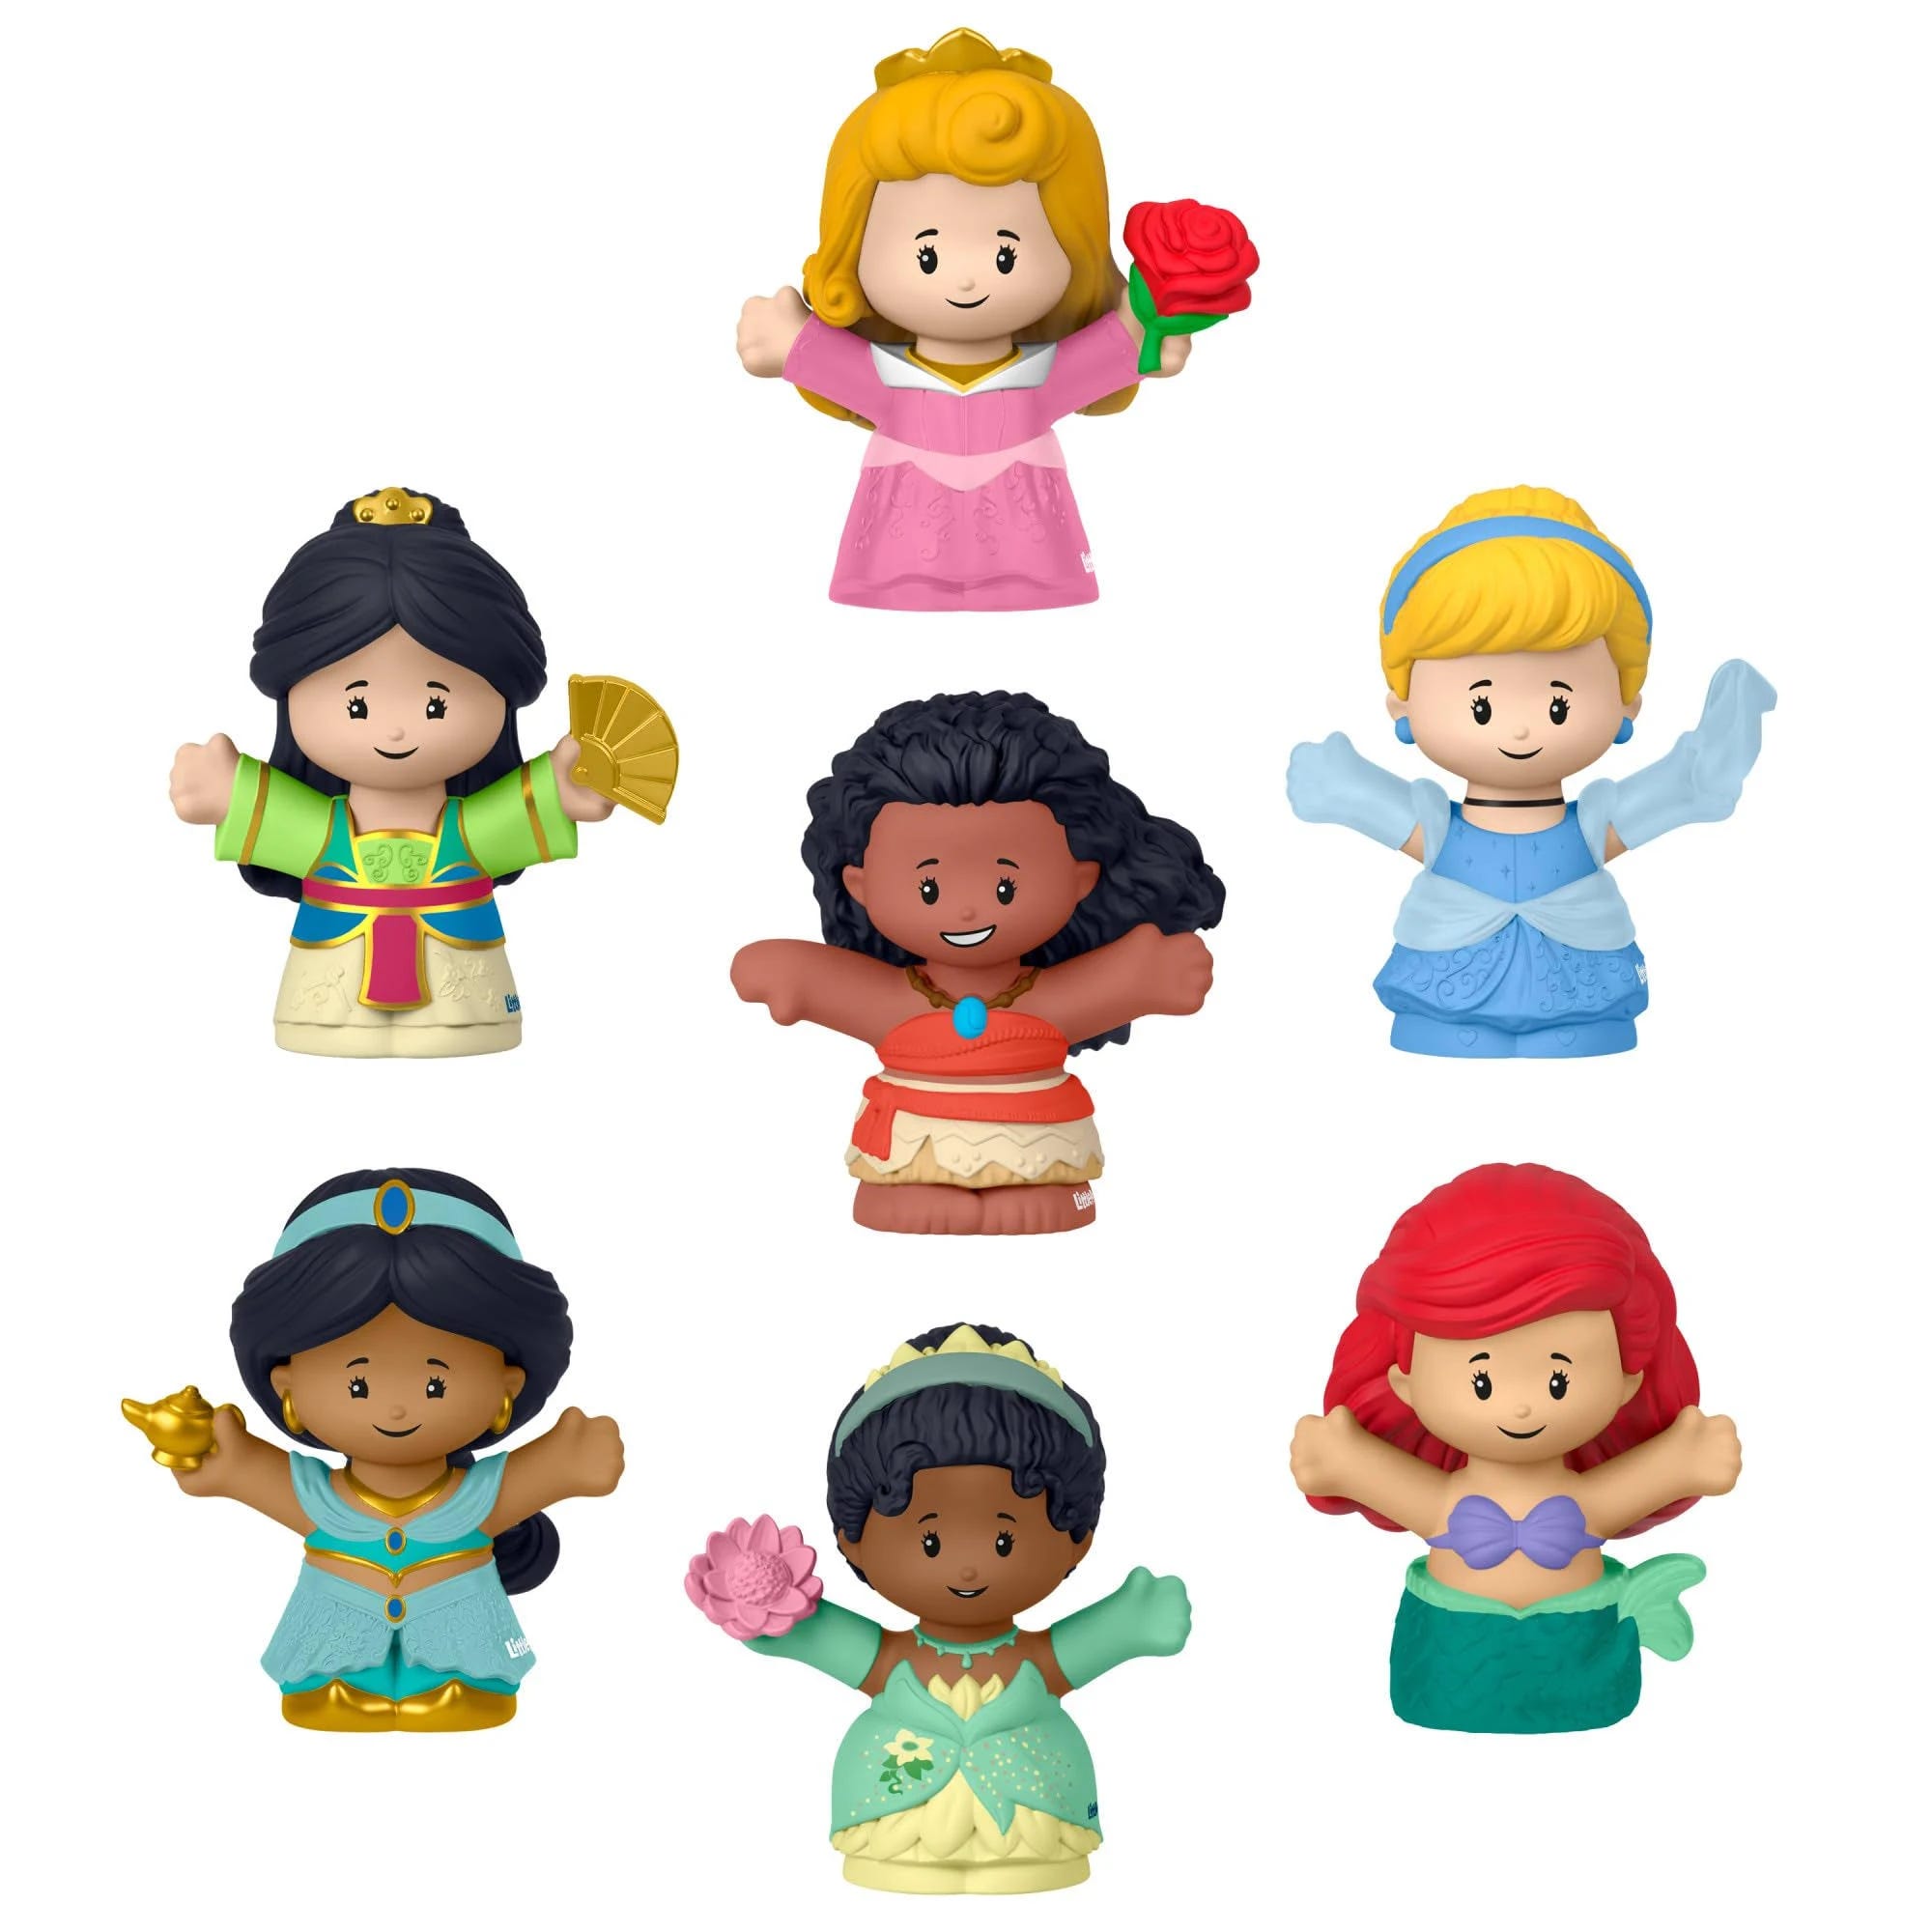 Disney Princess Little People Figure Set for Creative Play | Image